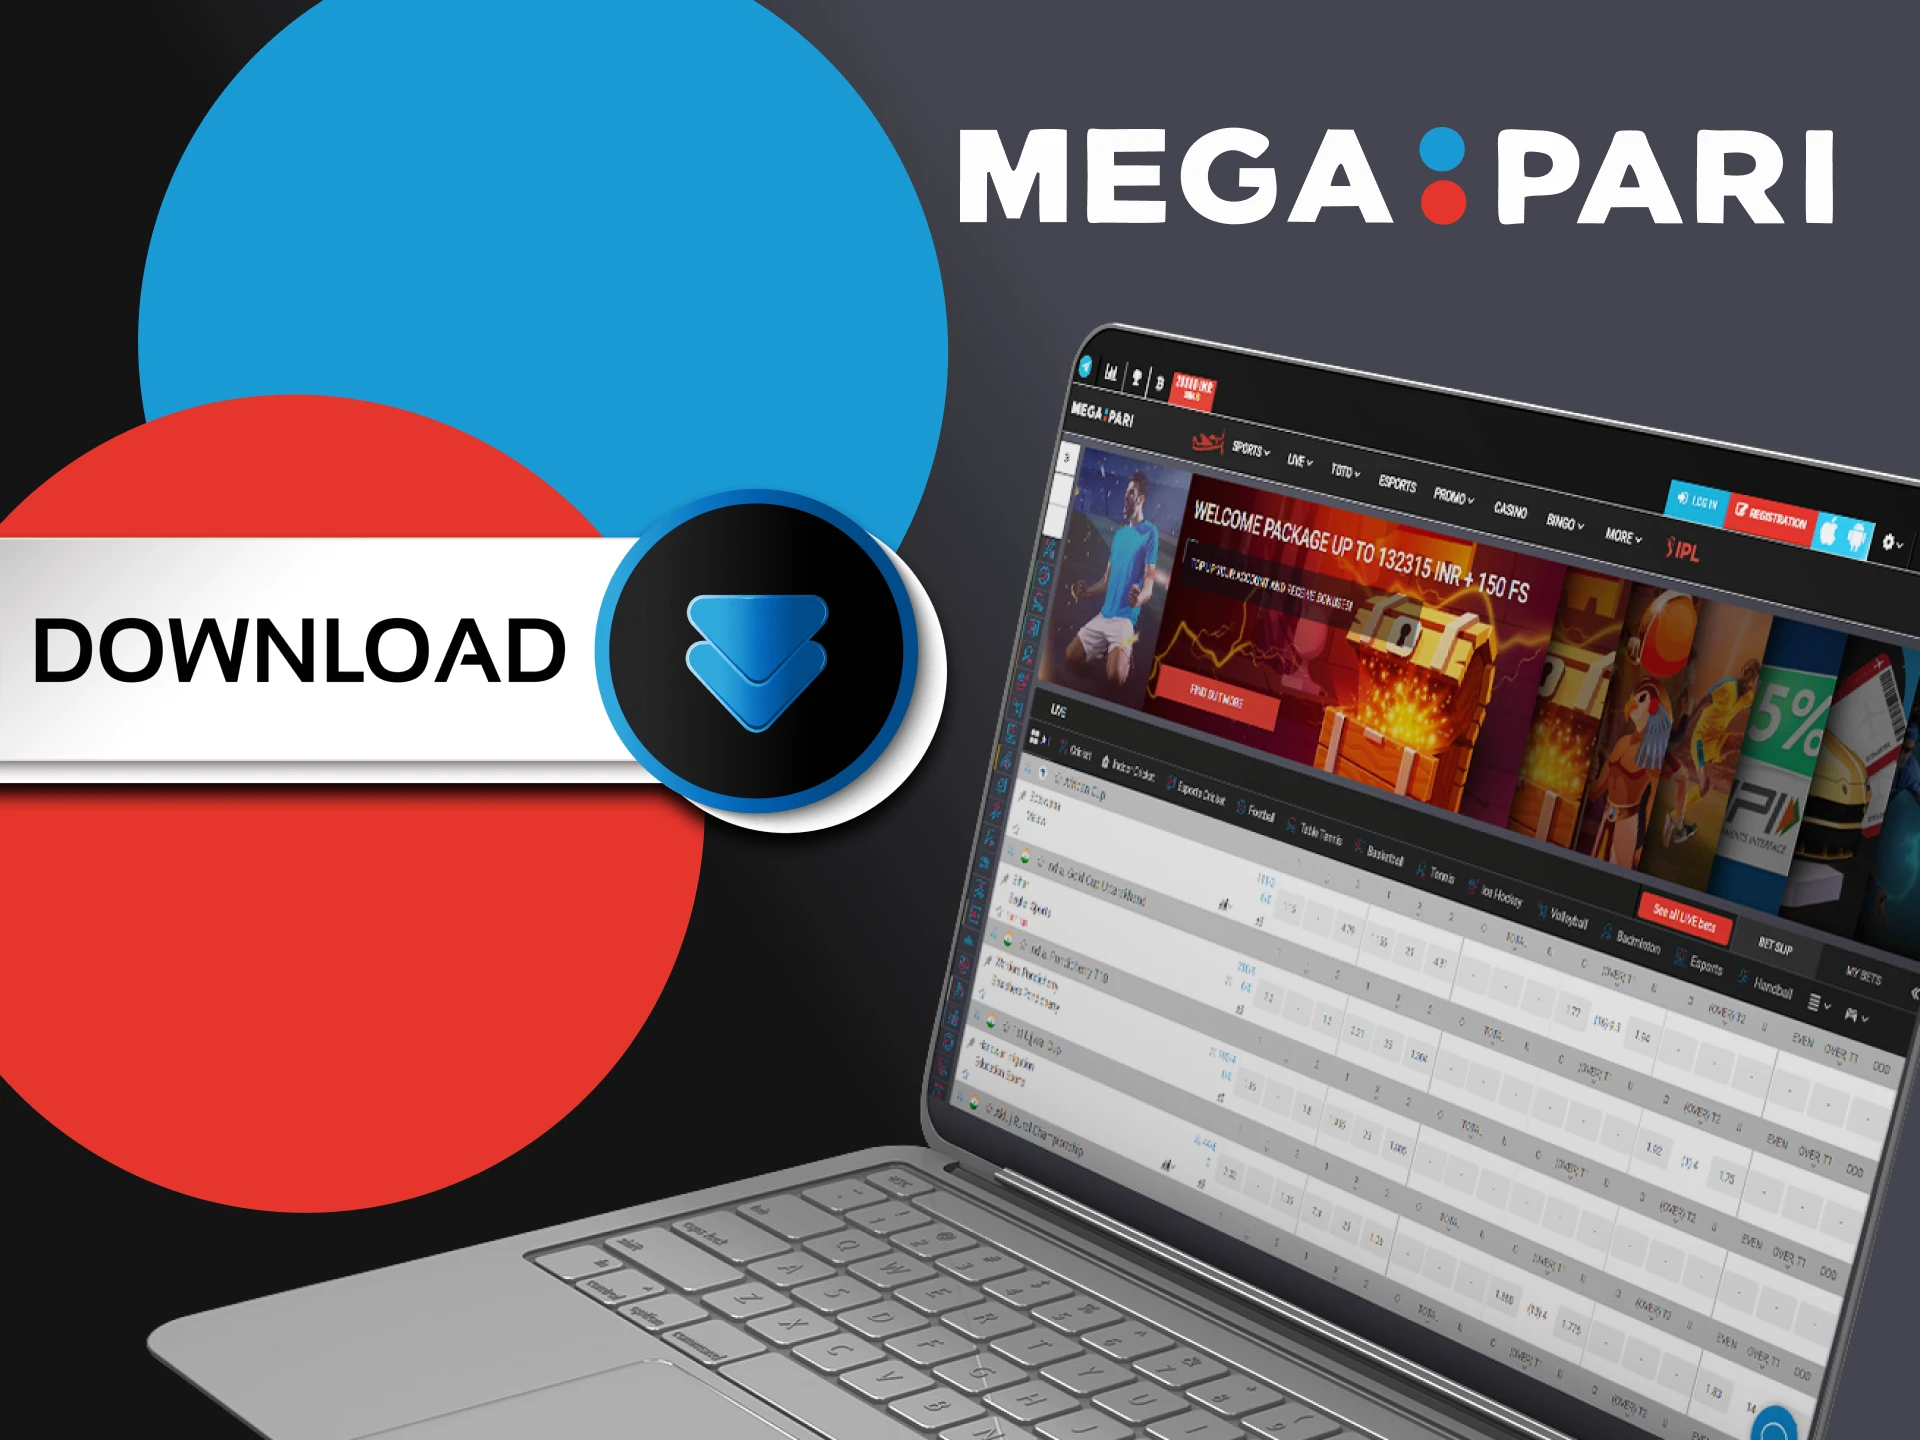 Download the Megapari app for PC.